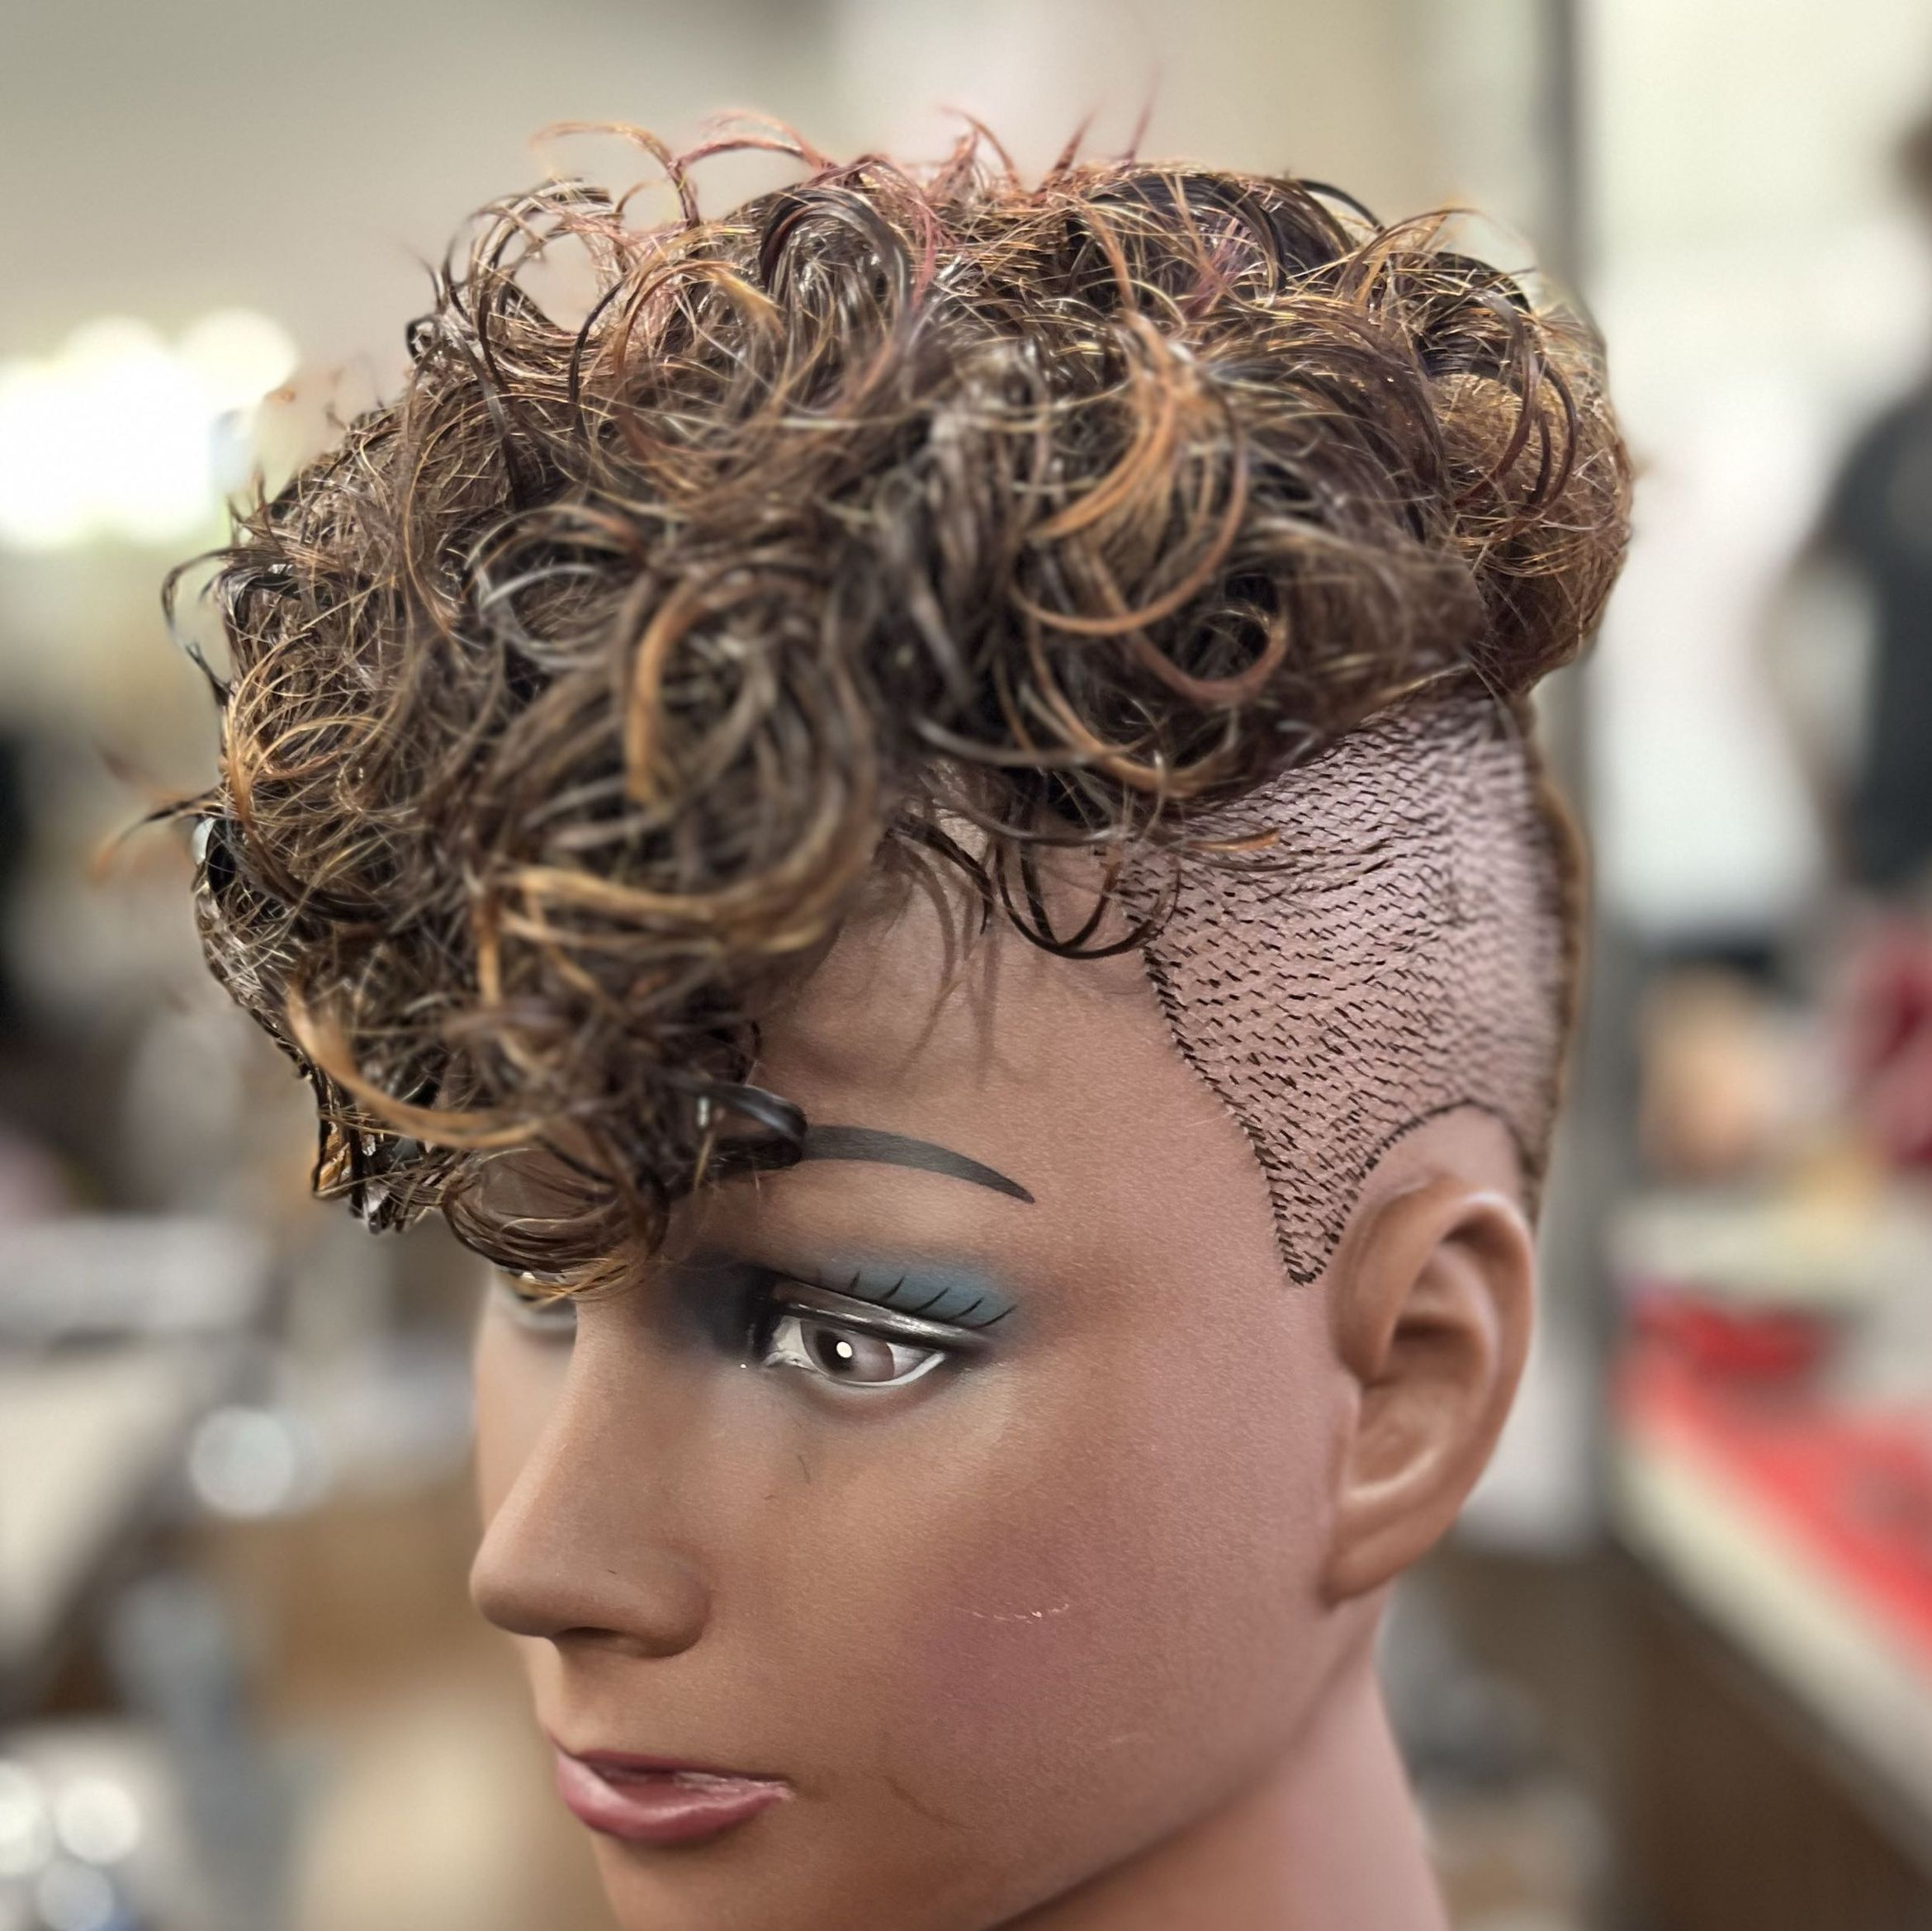 Bri’s braids and barbering, 91601, Los Angeles, 90046